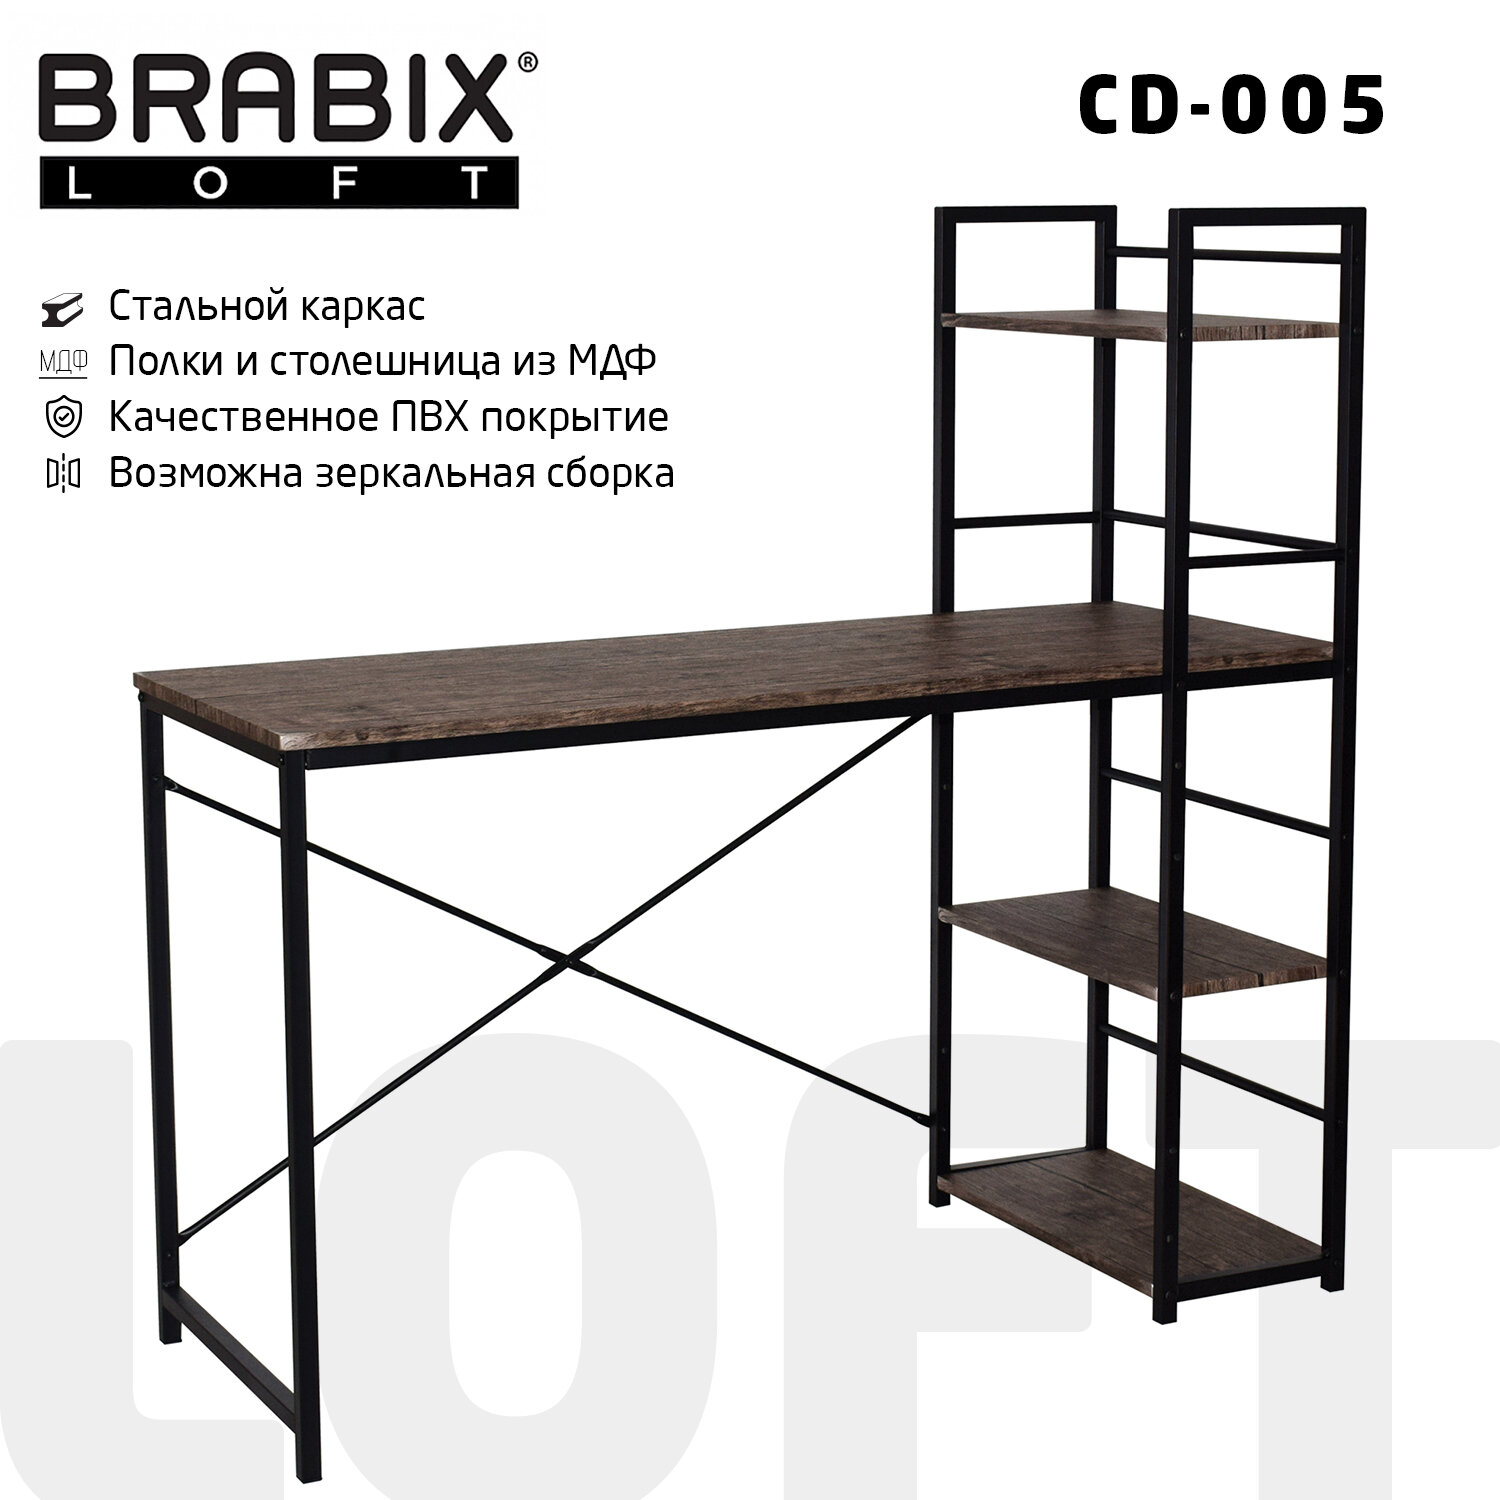 Brabix    BRABIX LOFT CD-005, 12005201200 , 3 ,   , 641221